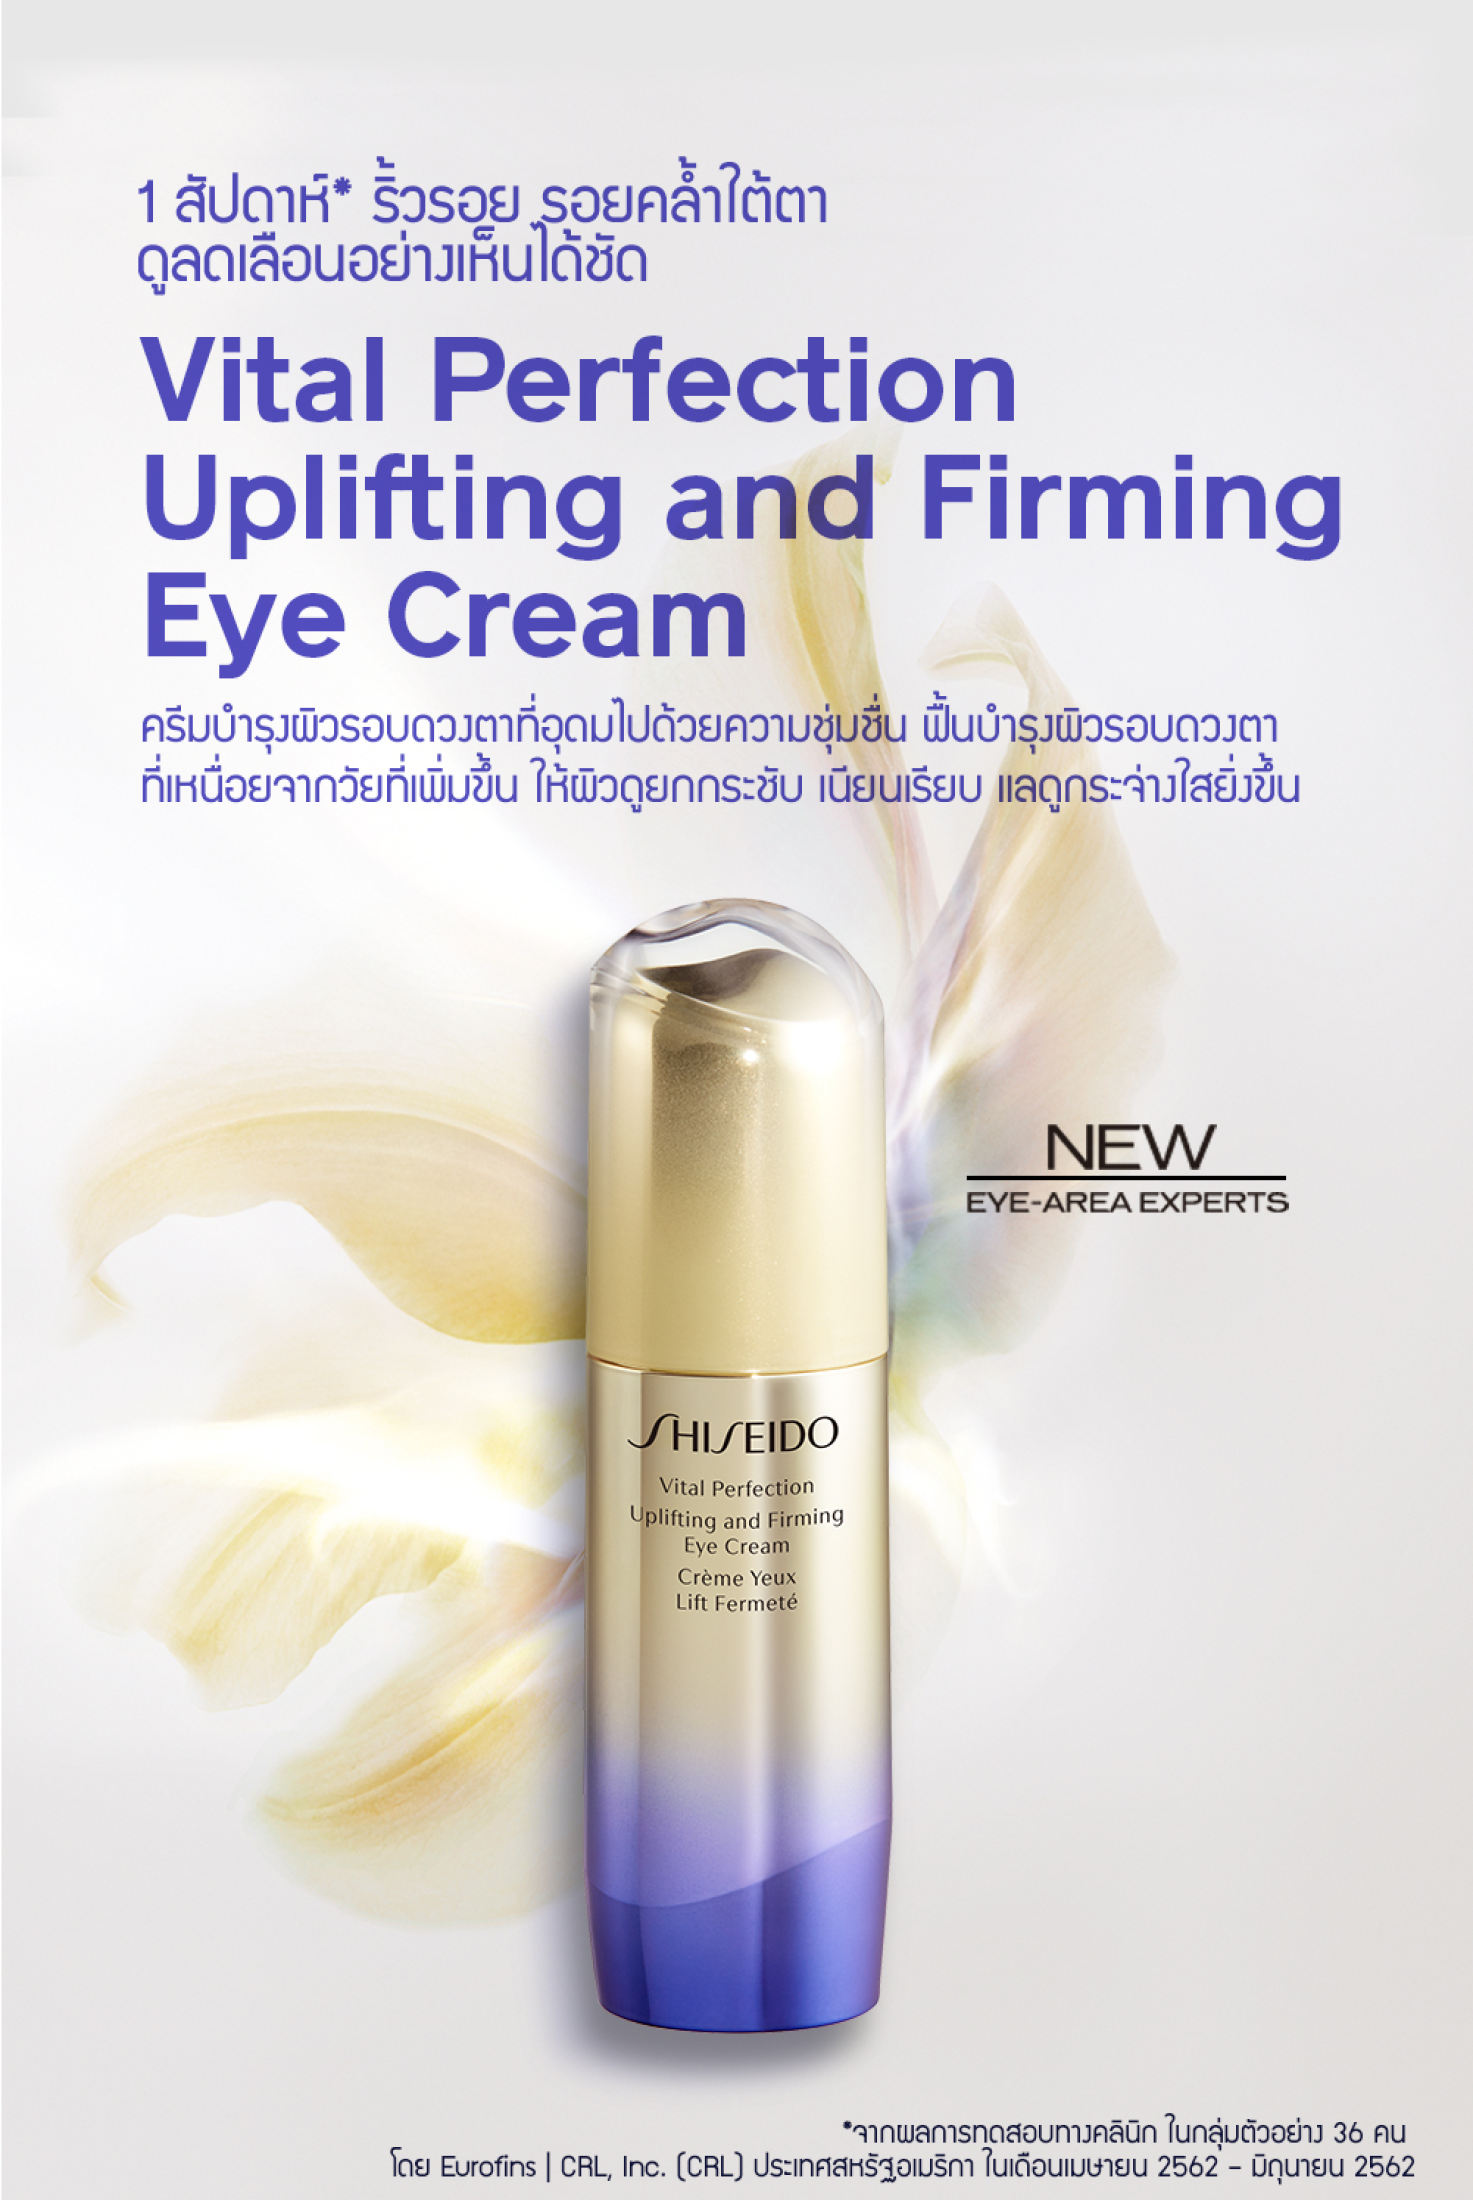 Shiseido Vital Perfection Uplifting and Firming Eye Cream 15ml |  Lazada.co.th